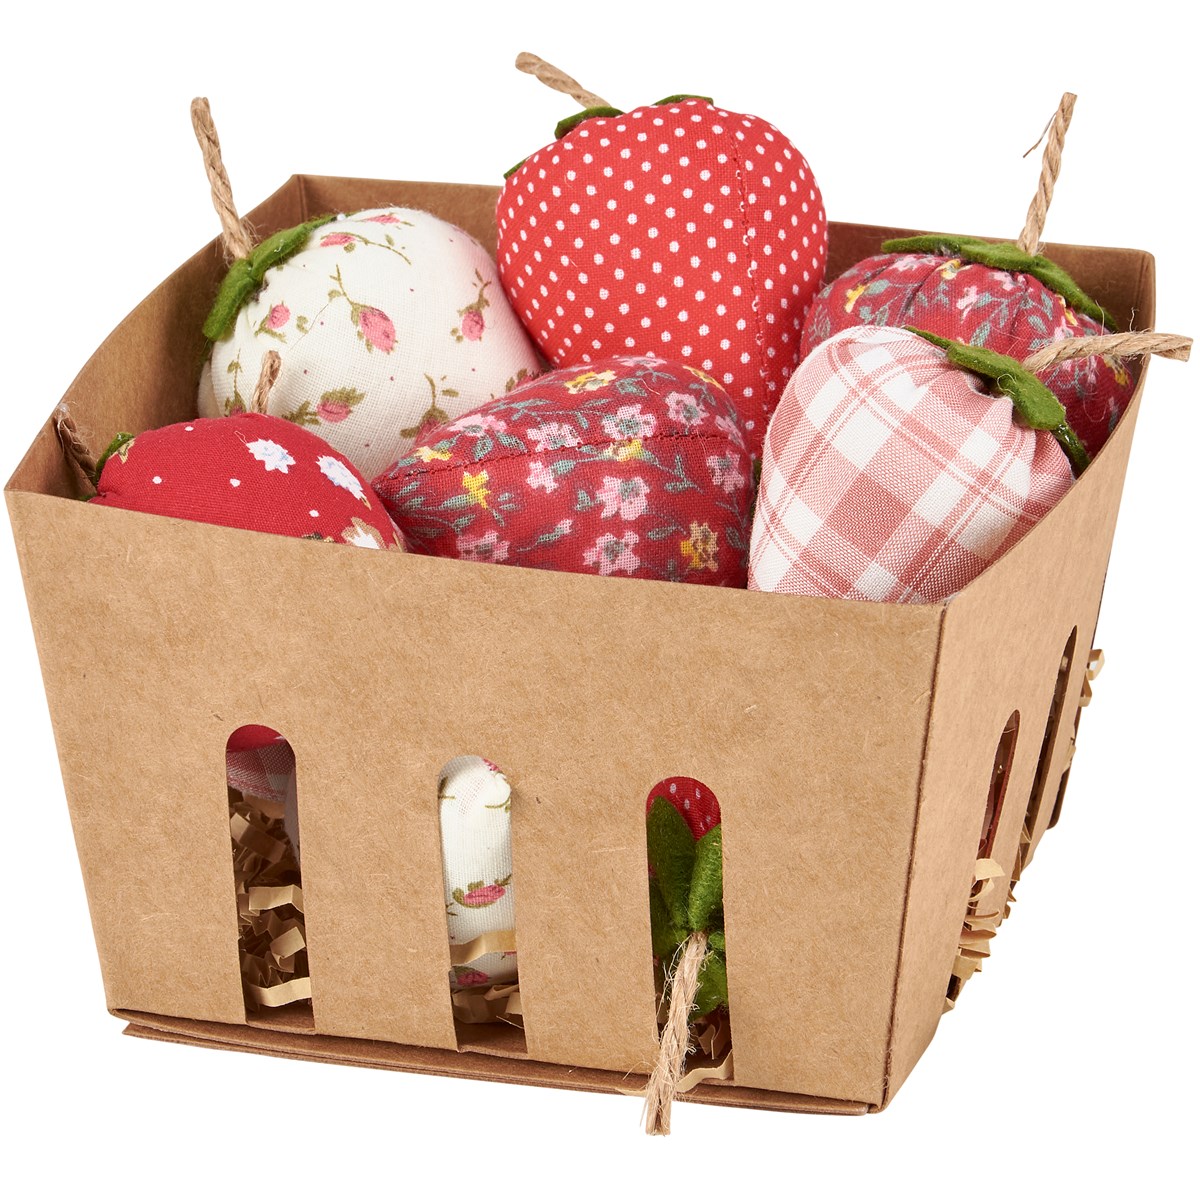 Fabric Strawberries In Basket  - Cotton, Jute, Felt